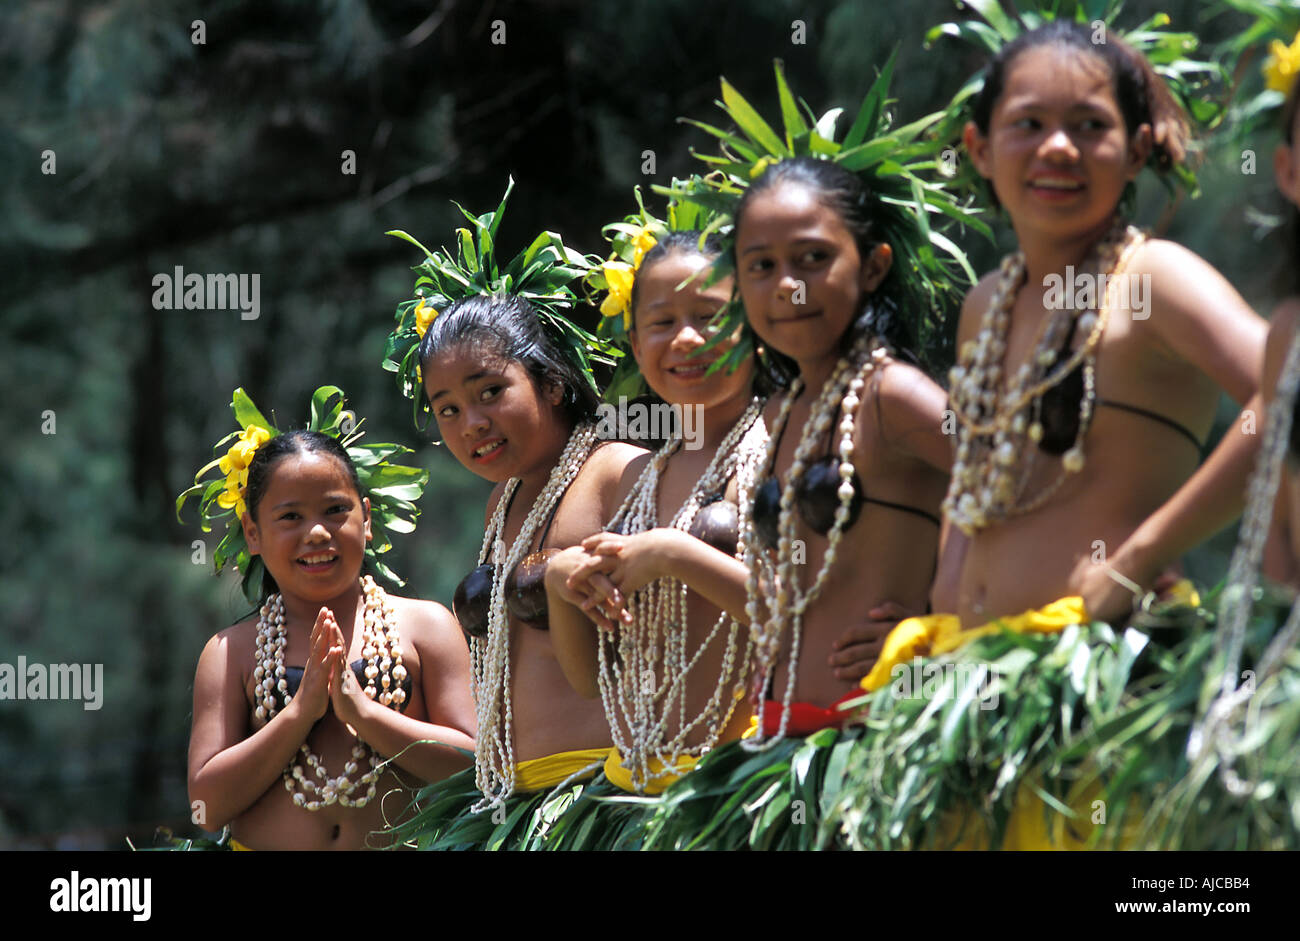 Troupe of Micronesian girls performing a dance at a cultural festival Garapan Saipan Northern Marianas islands Stock Photo